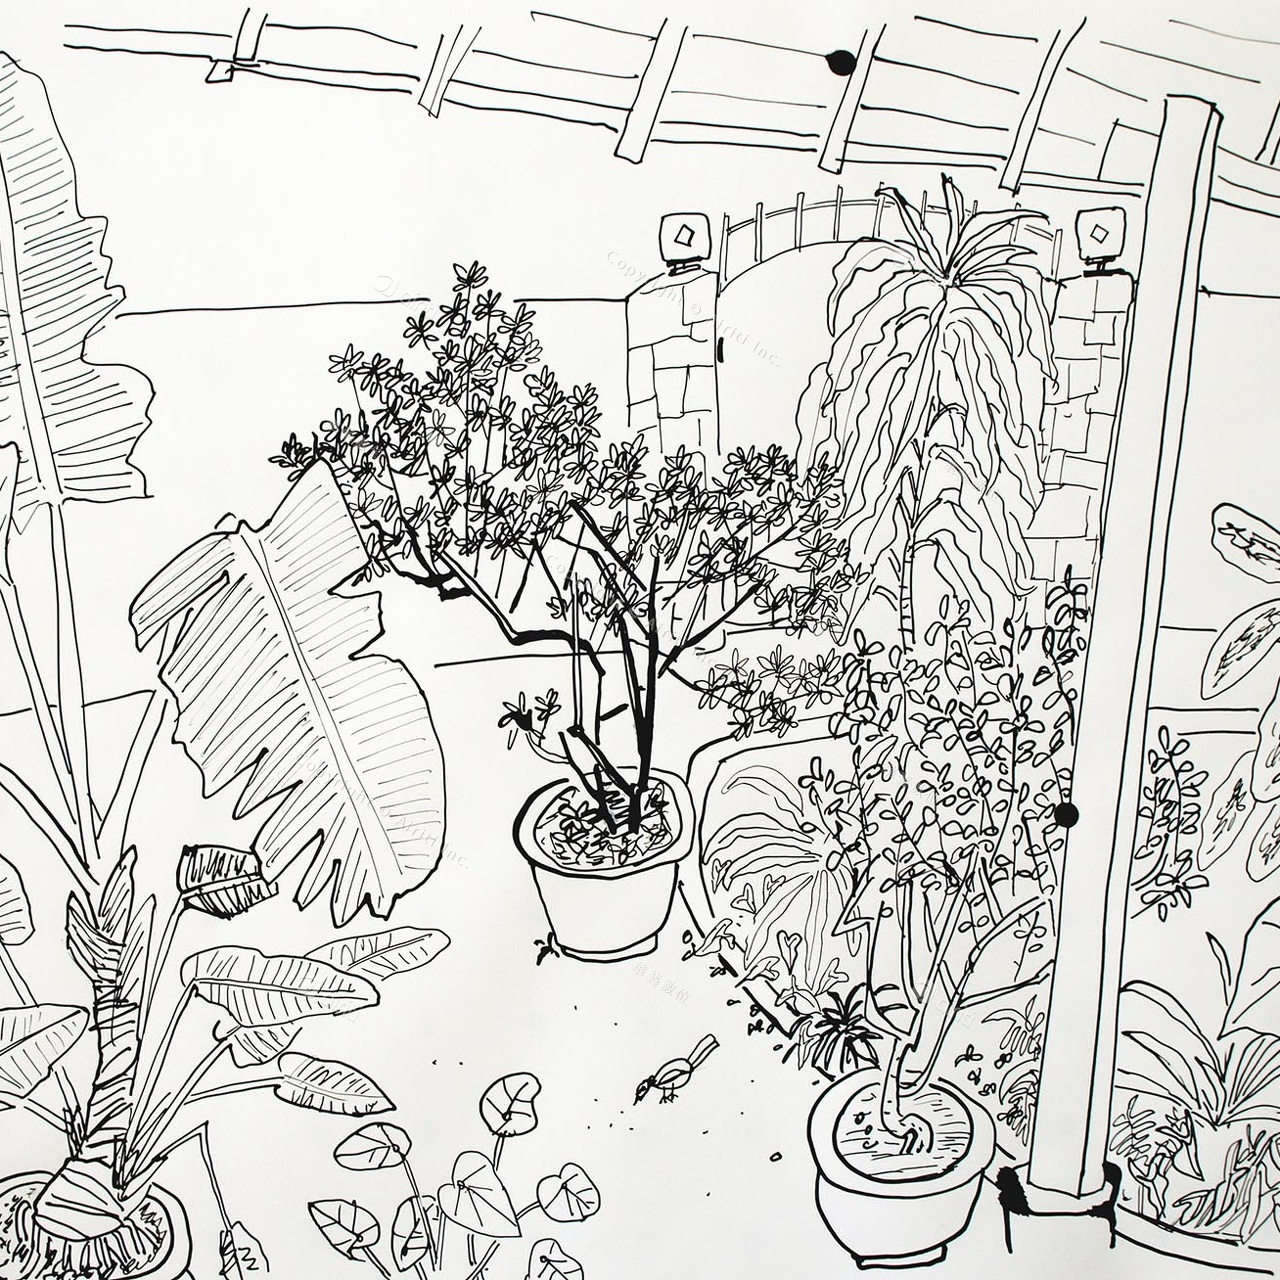 D026 Courtyard- Pen Drawing